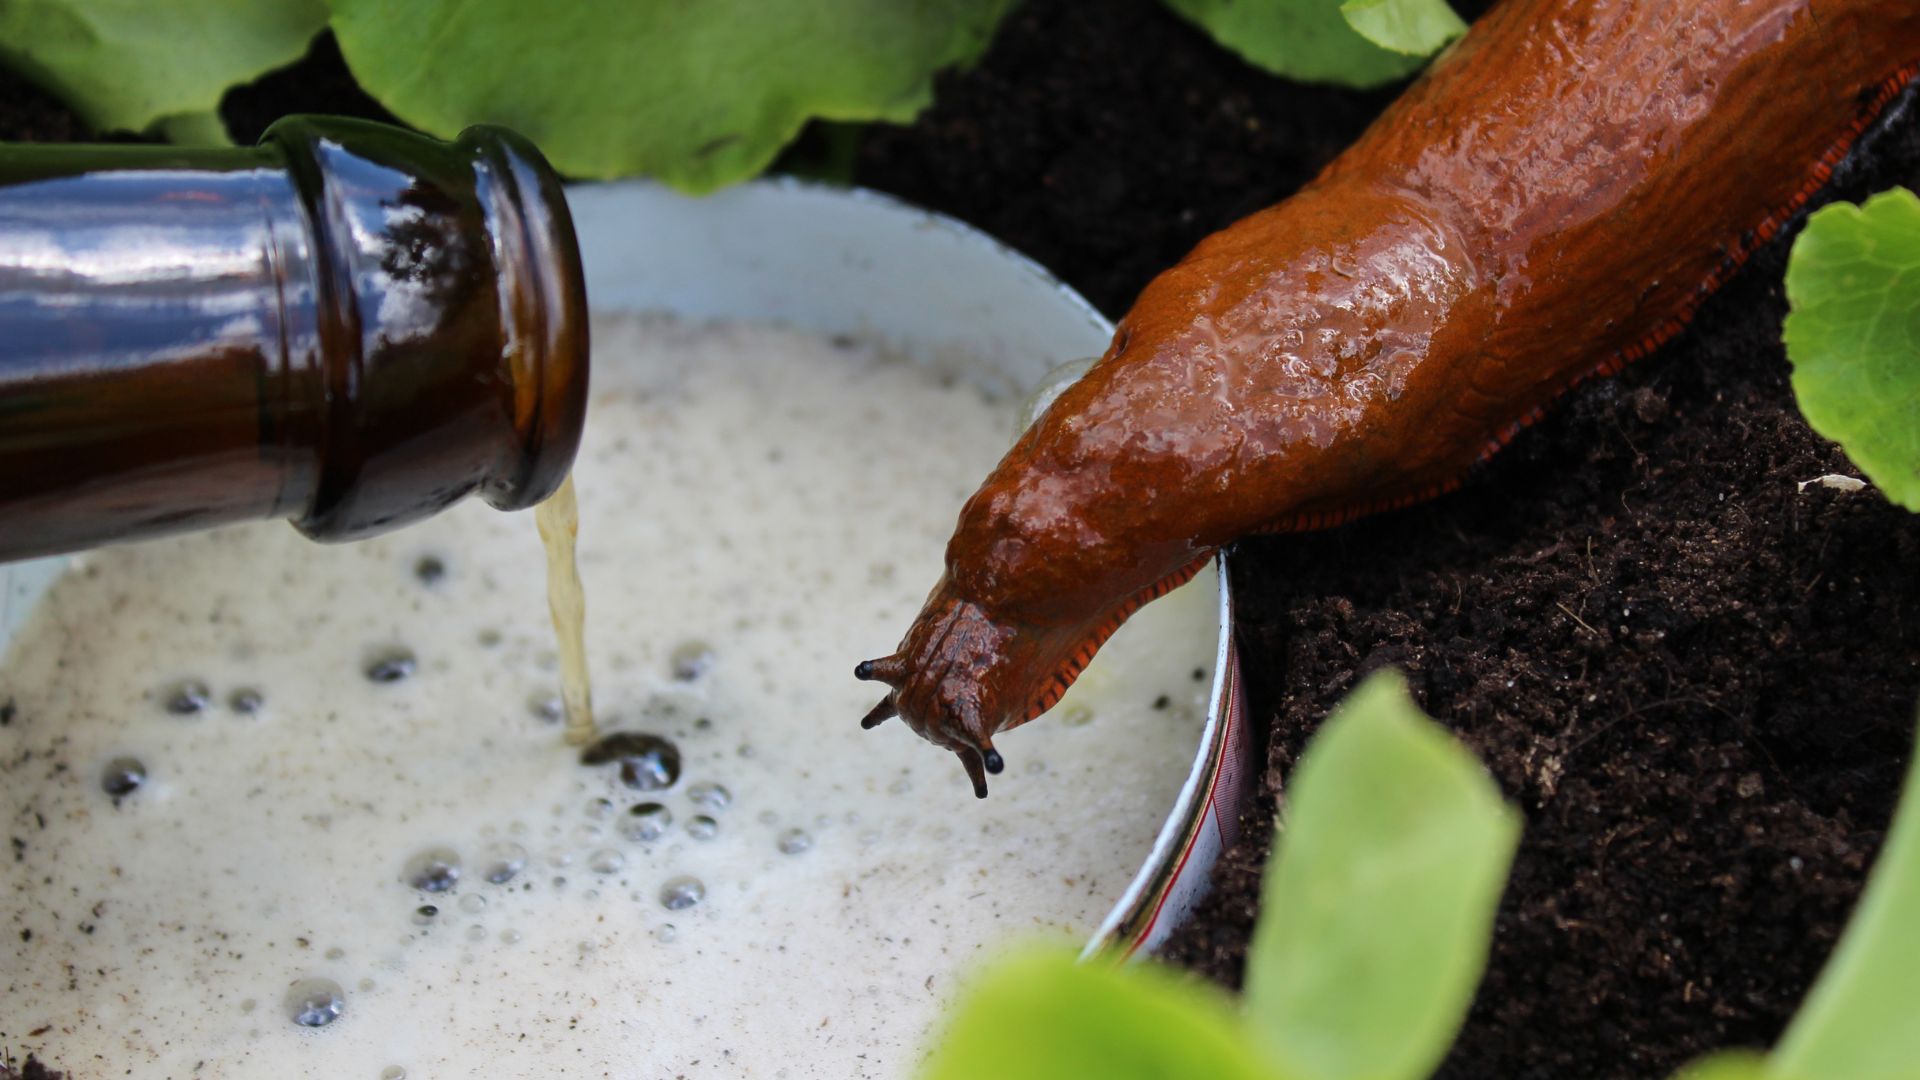 A slug next to a bowl of beer